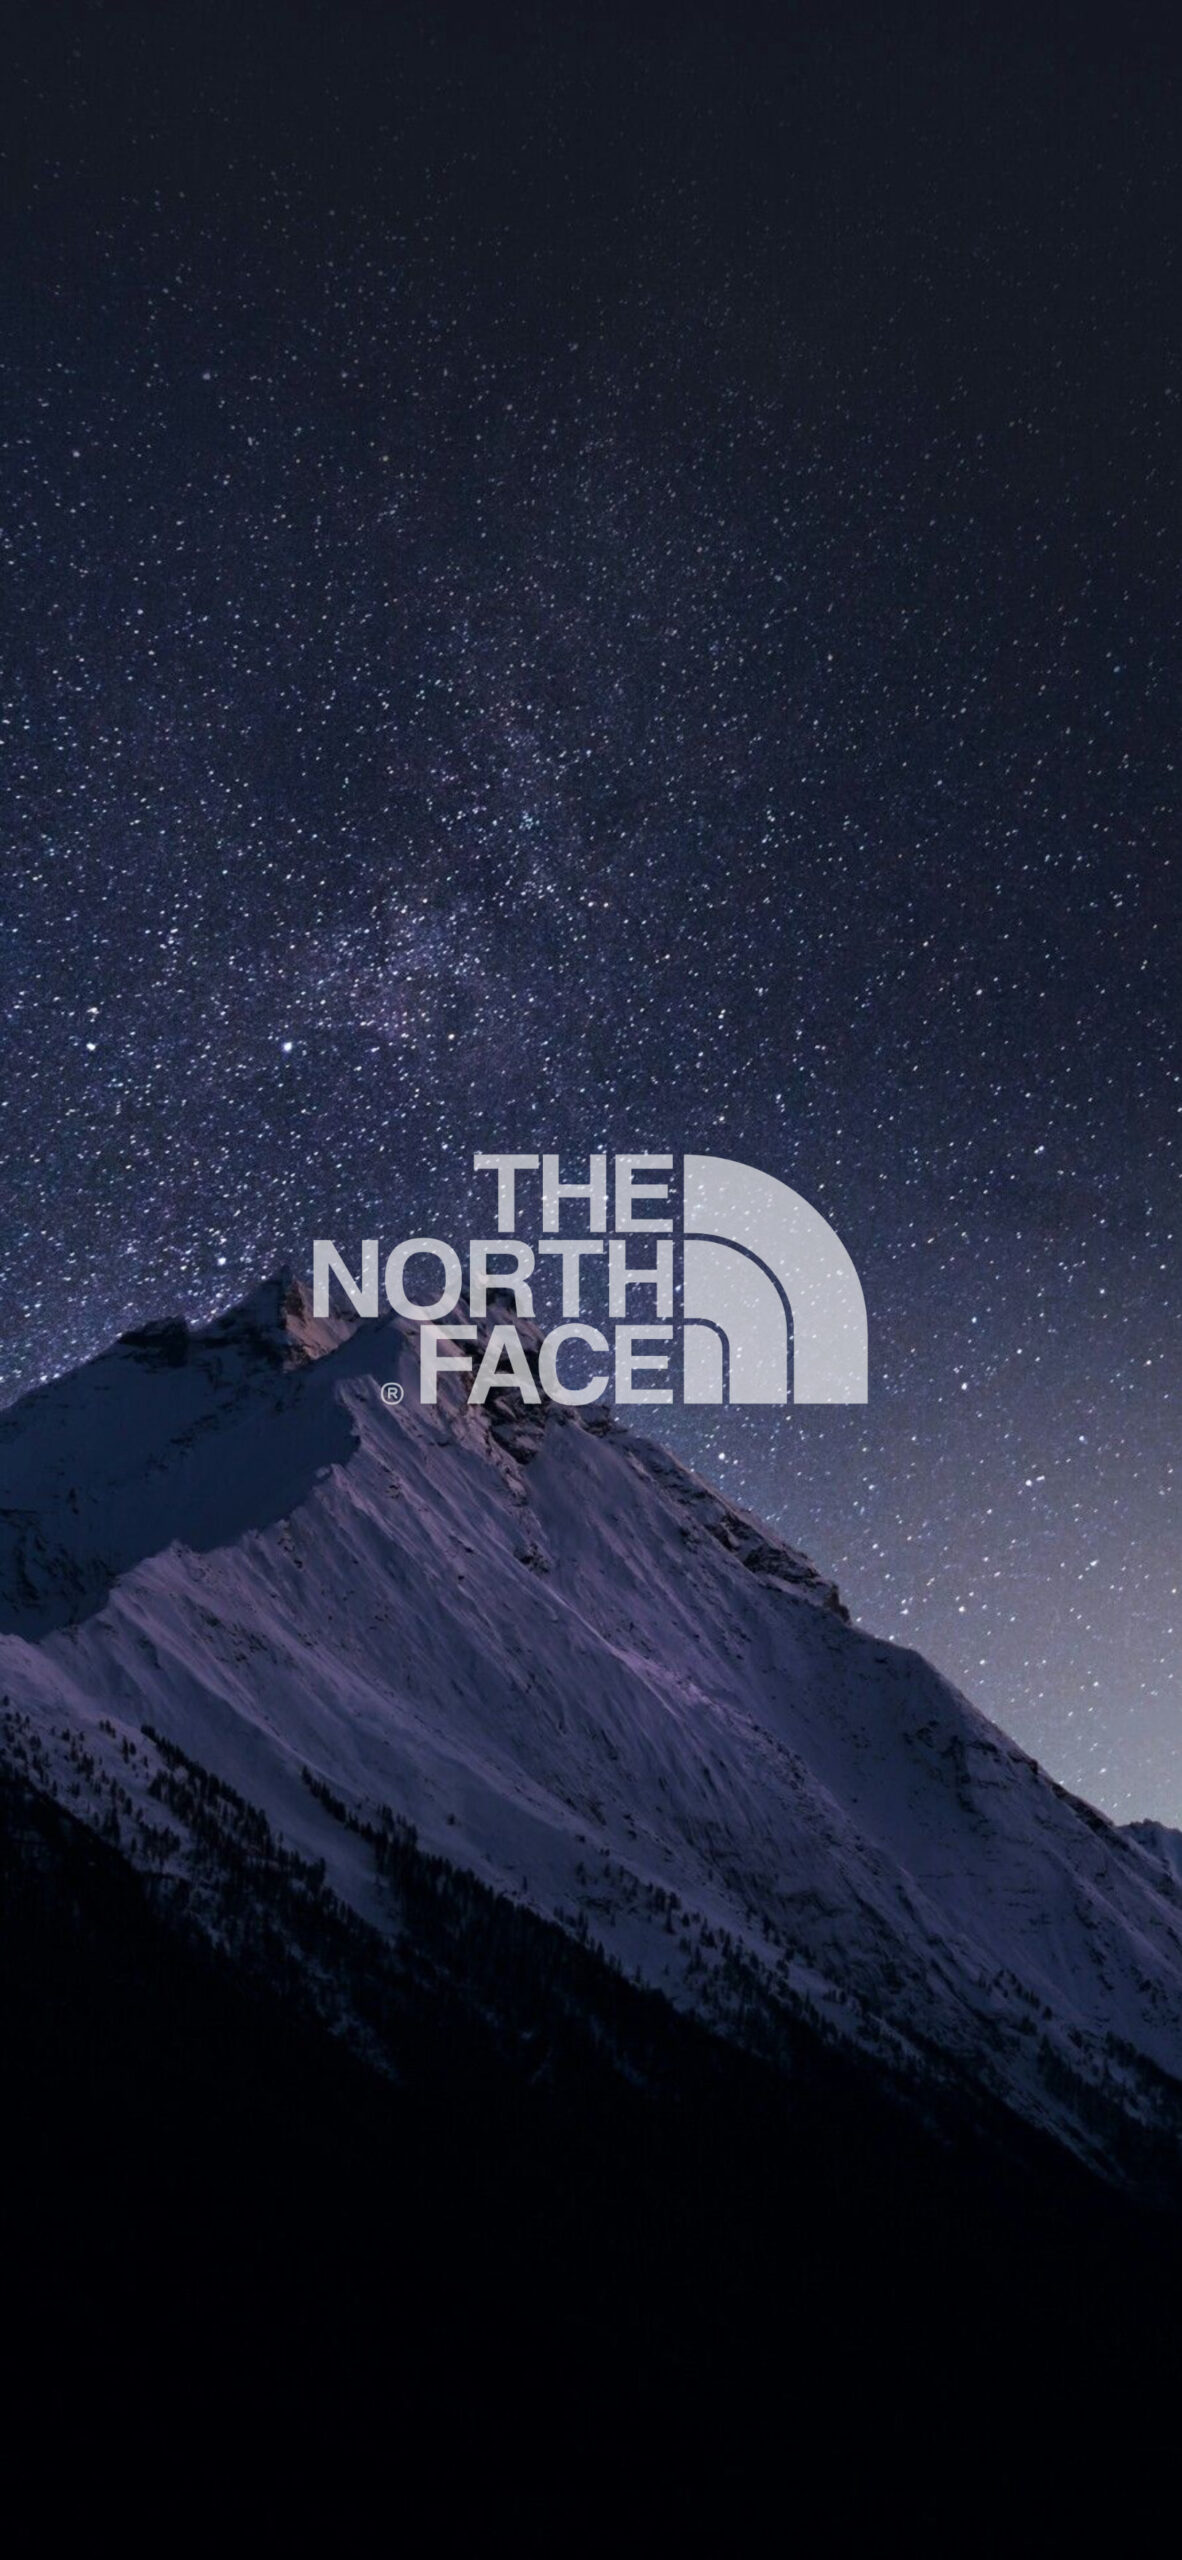 thenorthface33 scaled - THE NORTH FACE /ザ・ノース・フェイスのおしゃれな無料高画質スマホ壁紙51枚 [iPhone＆Androidに対応]